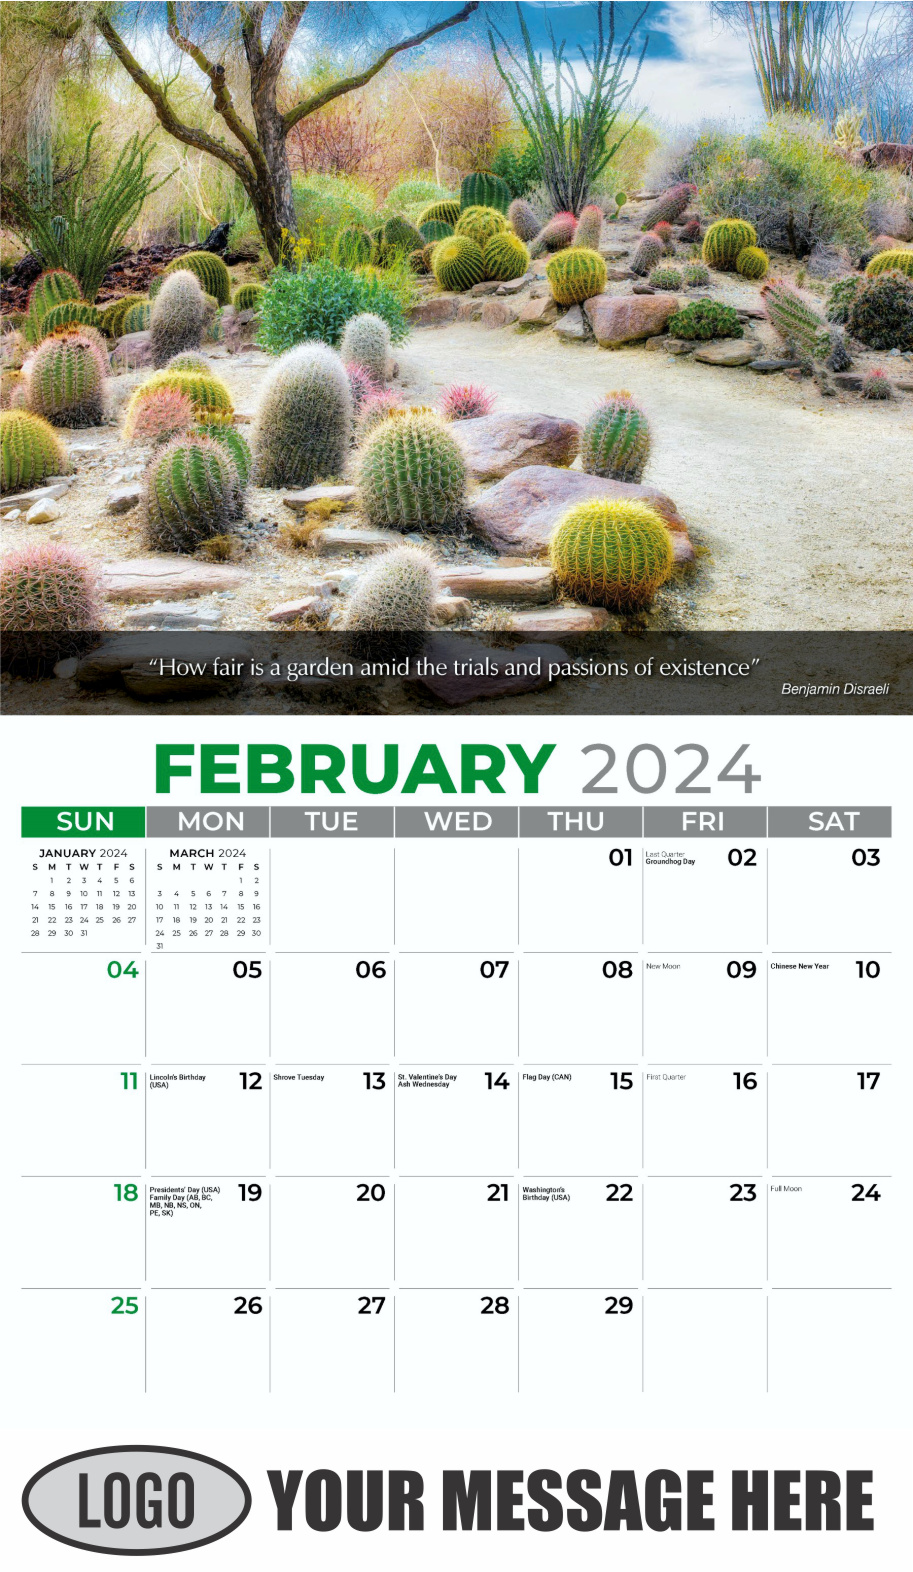 Flowers and Gardens 2024 Business Advertising Calendar - February